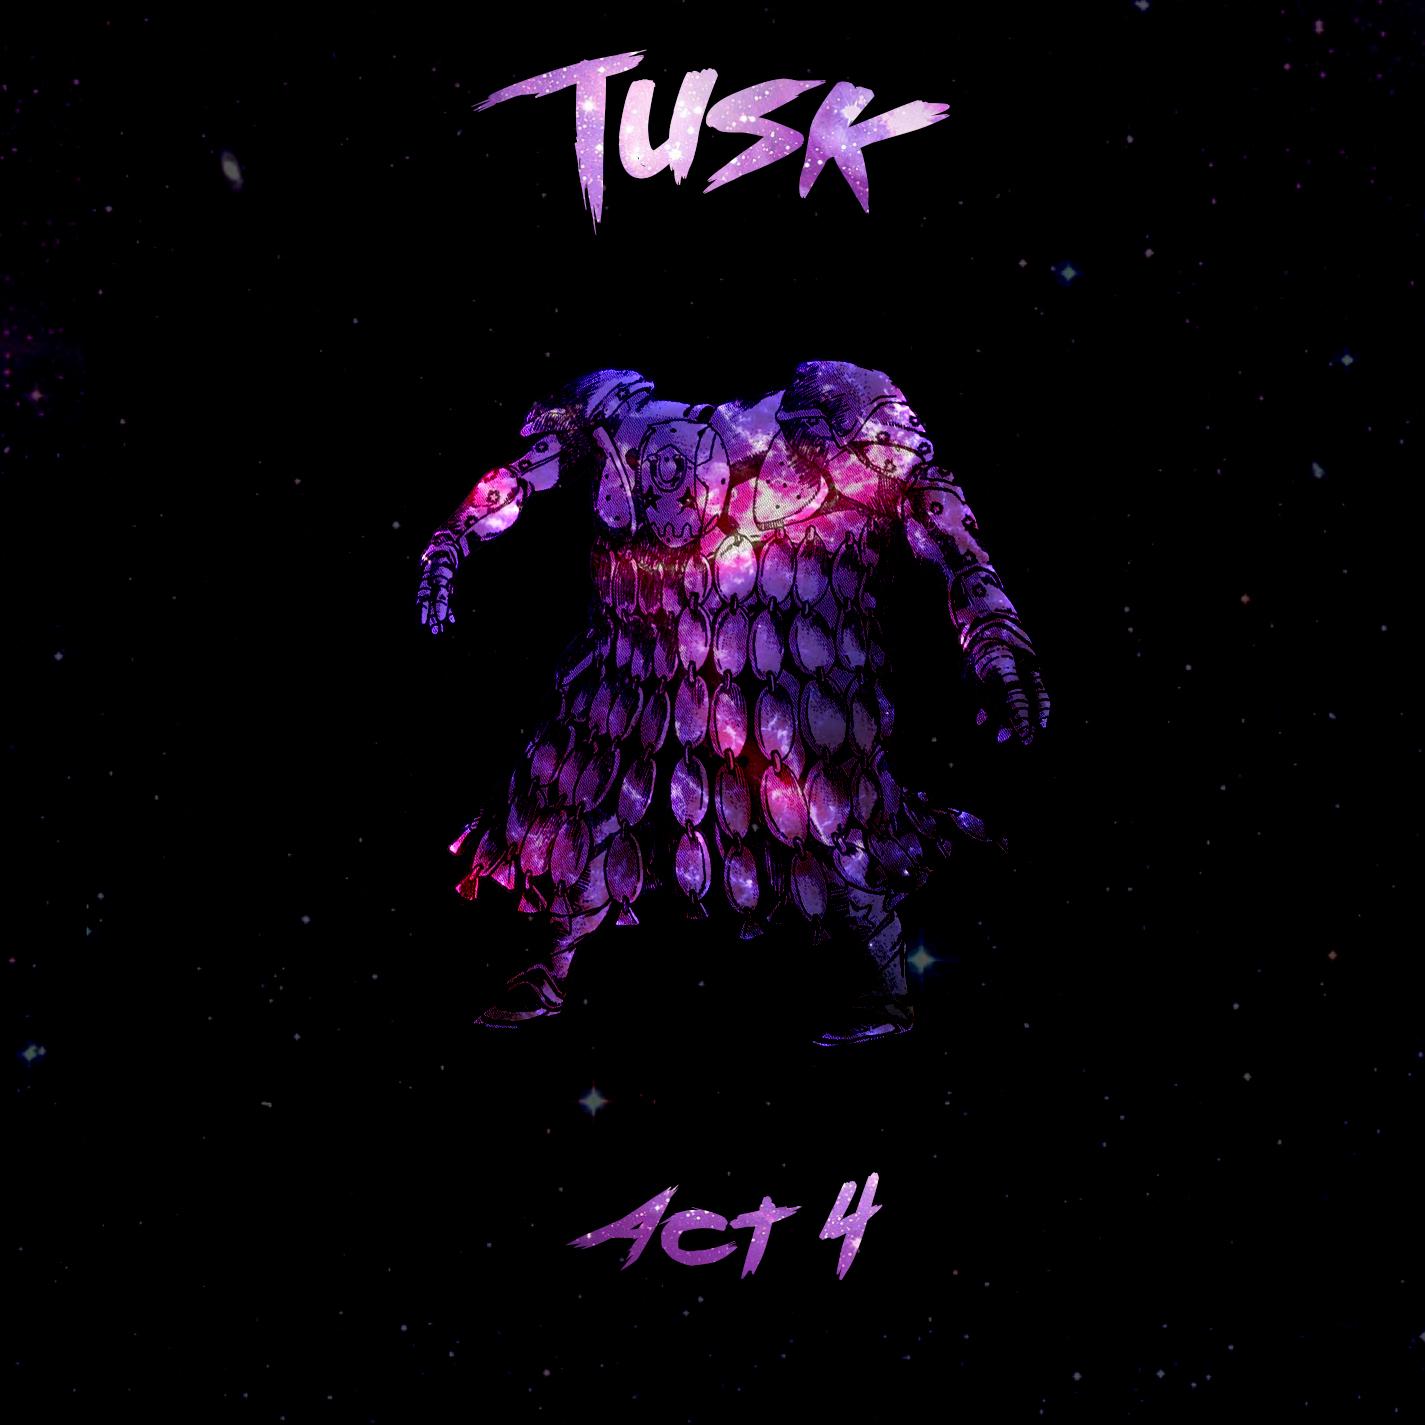 Tusk act 4 ora ringtone by neoblast54 - Download on ZEDGE™